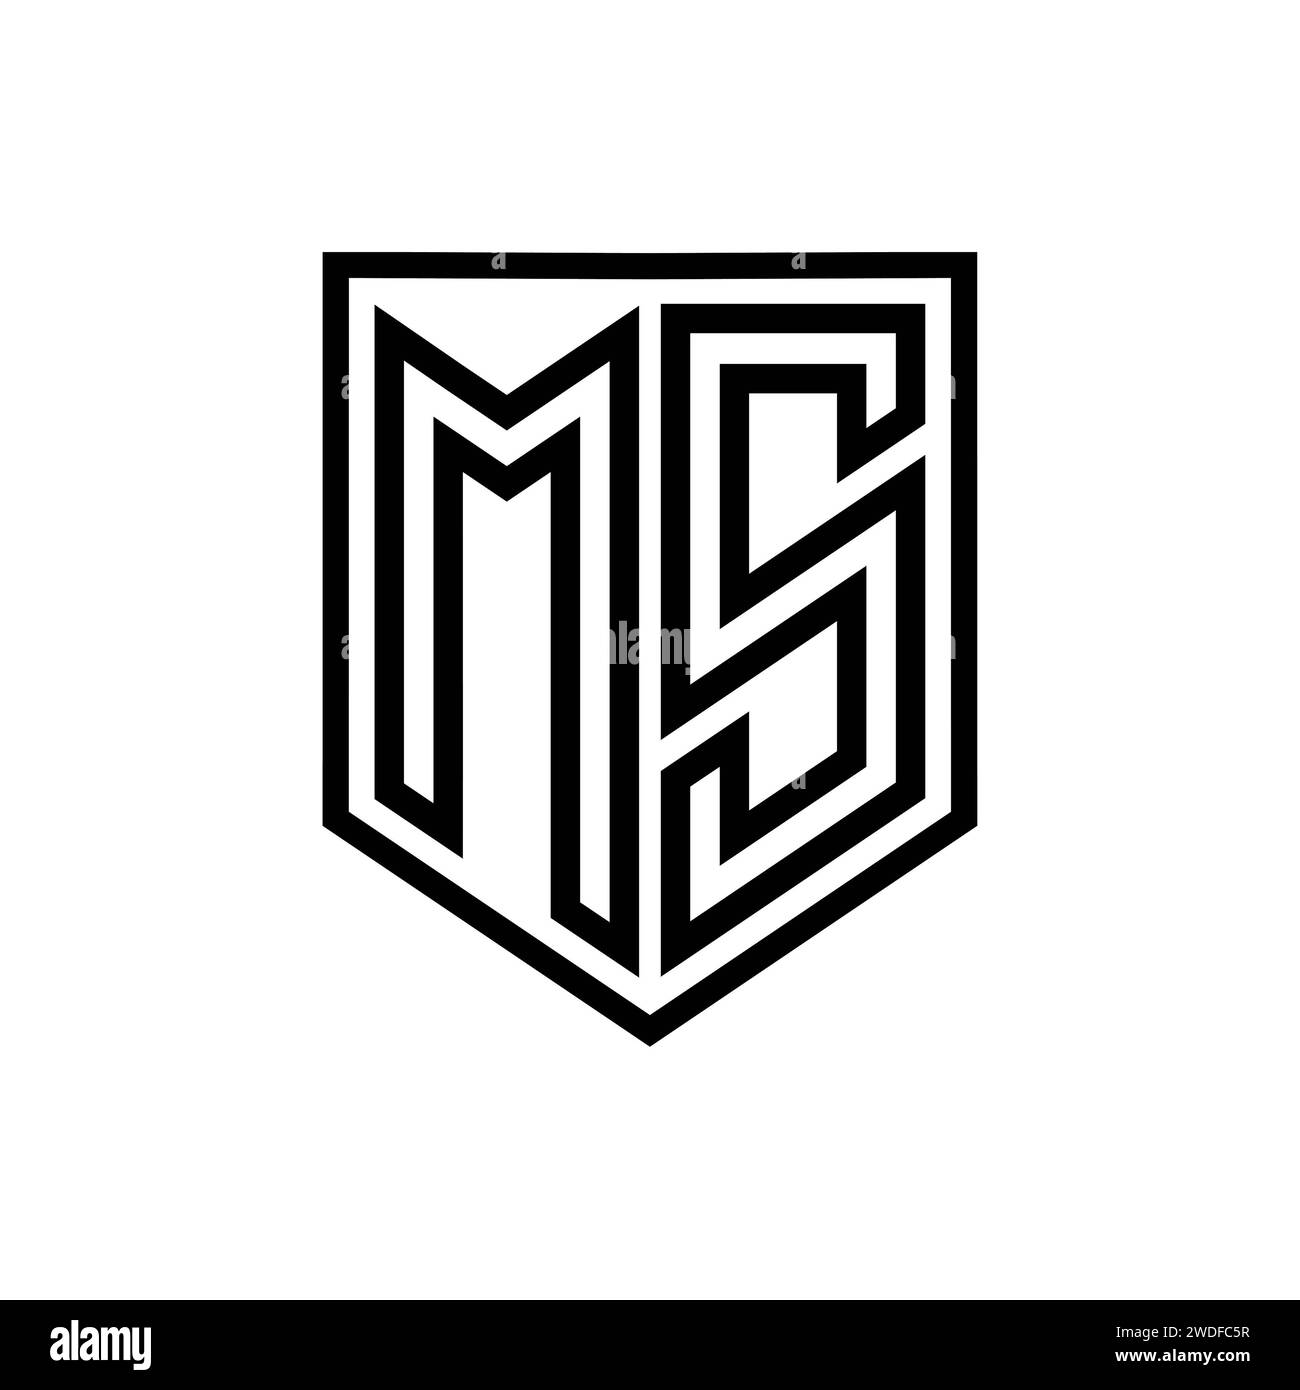 MS Letter Logo monogram shield geometric line inside shield isolated style design template Stock Photo